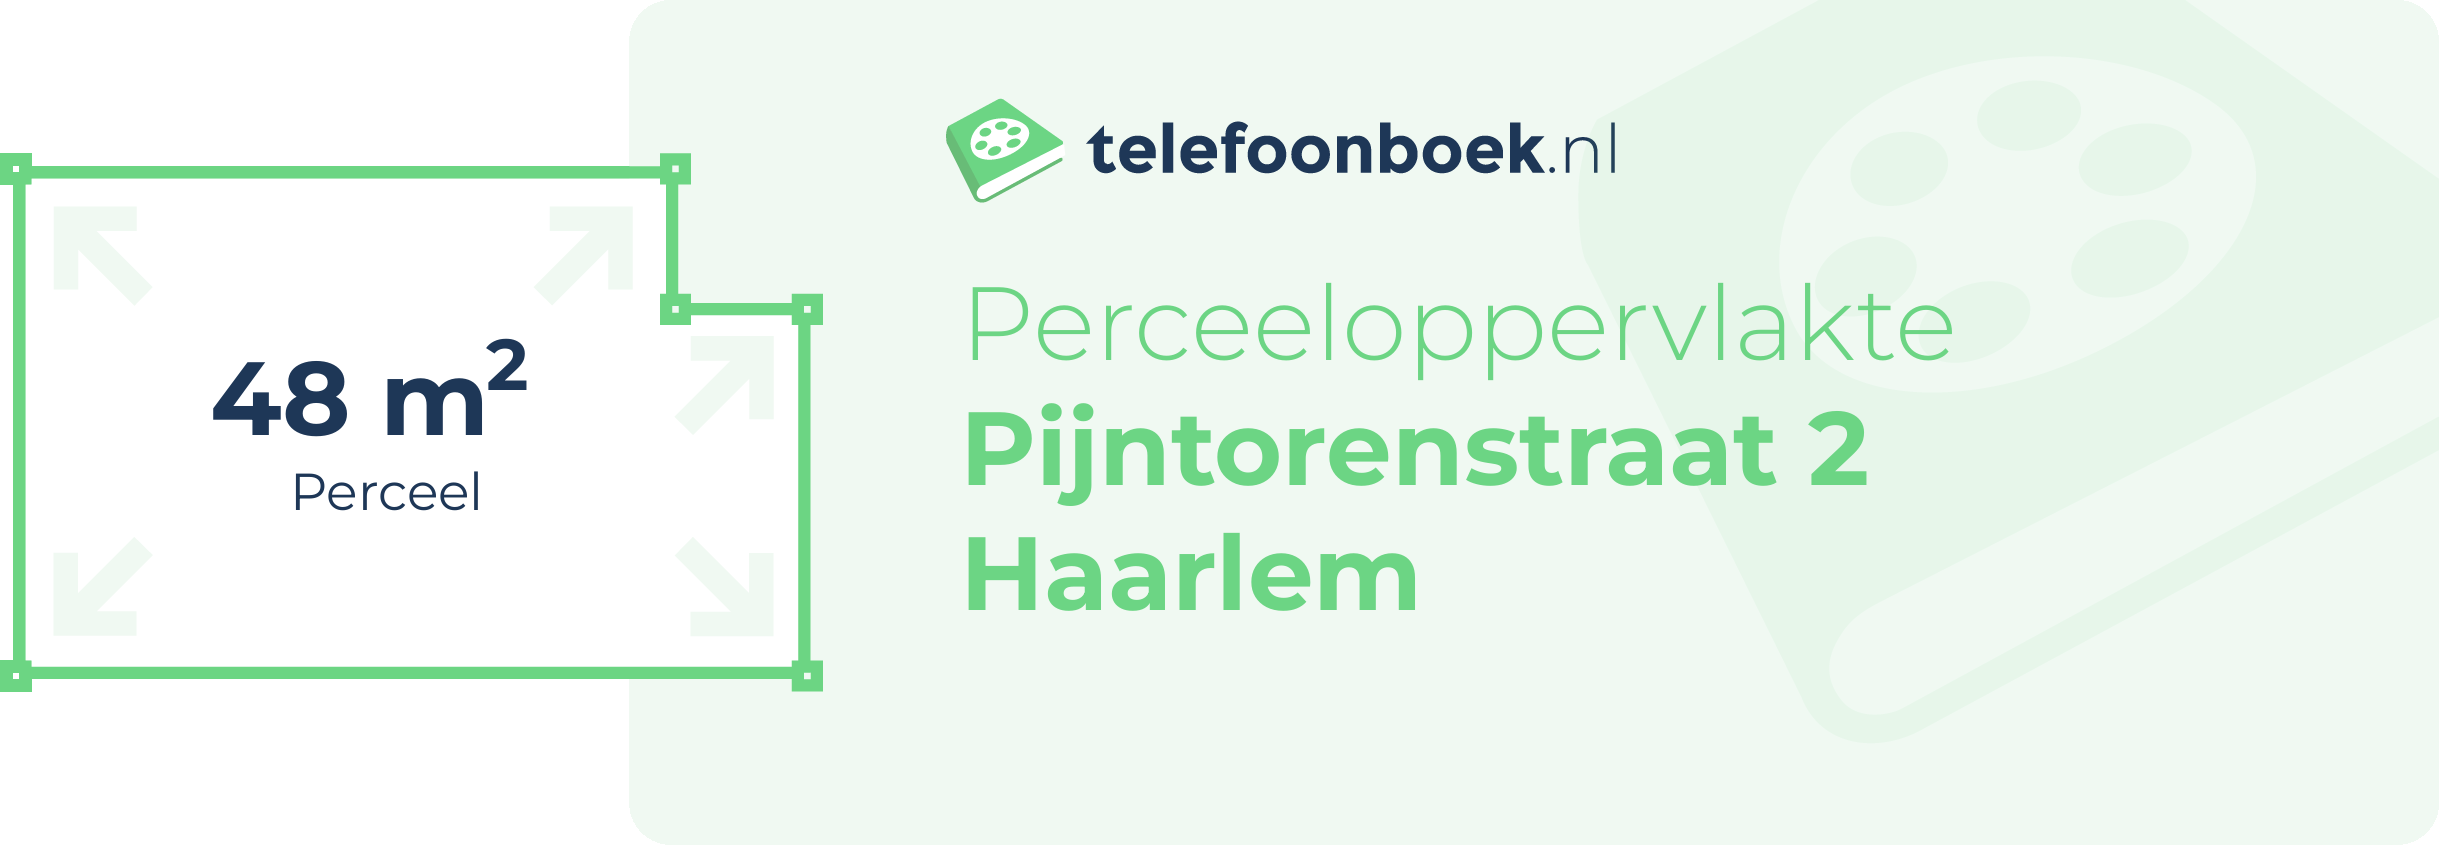 Perceeloppervlakte Pijntorenstraat 2 Haarlem